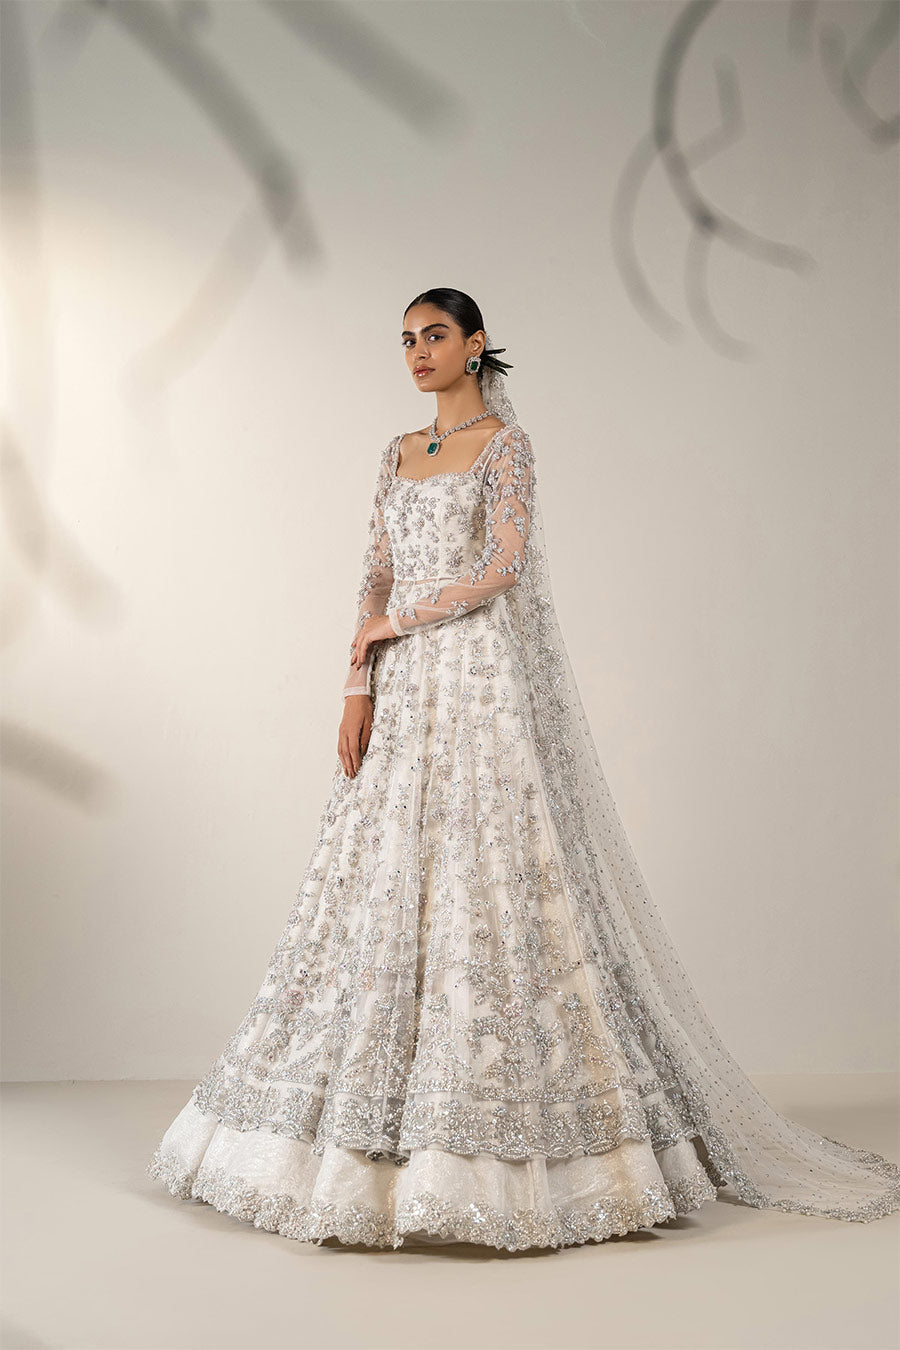 Elegant Pakistani Wedding Dresses